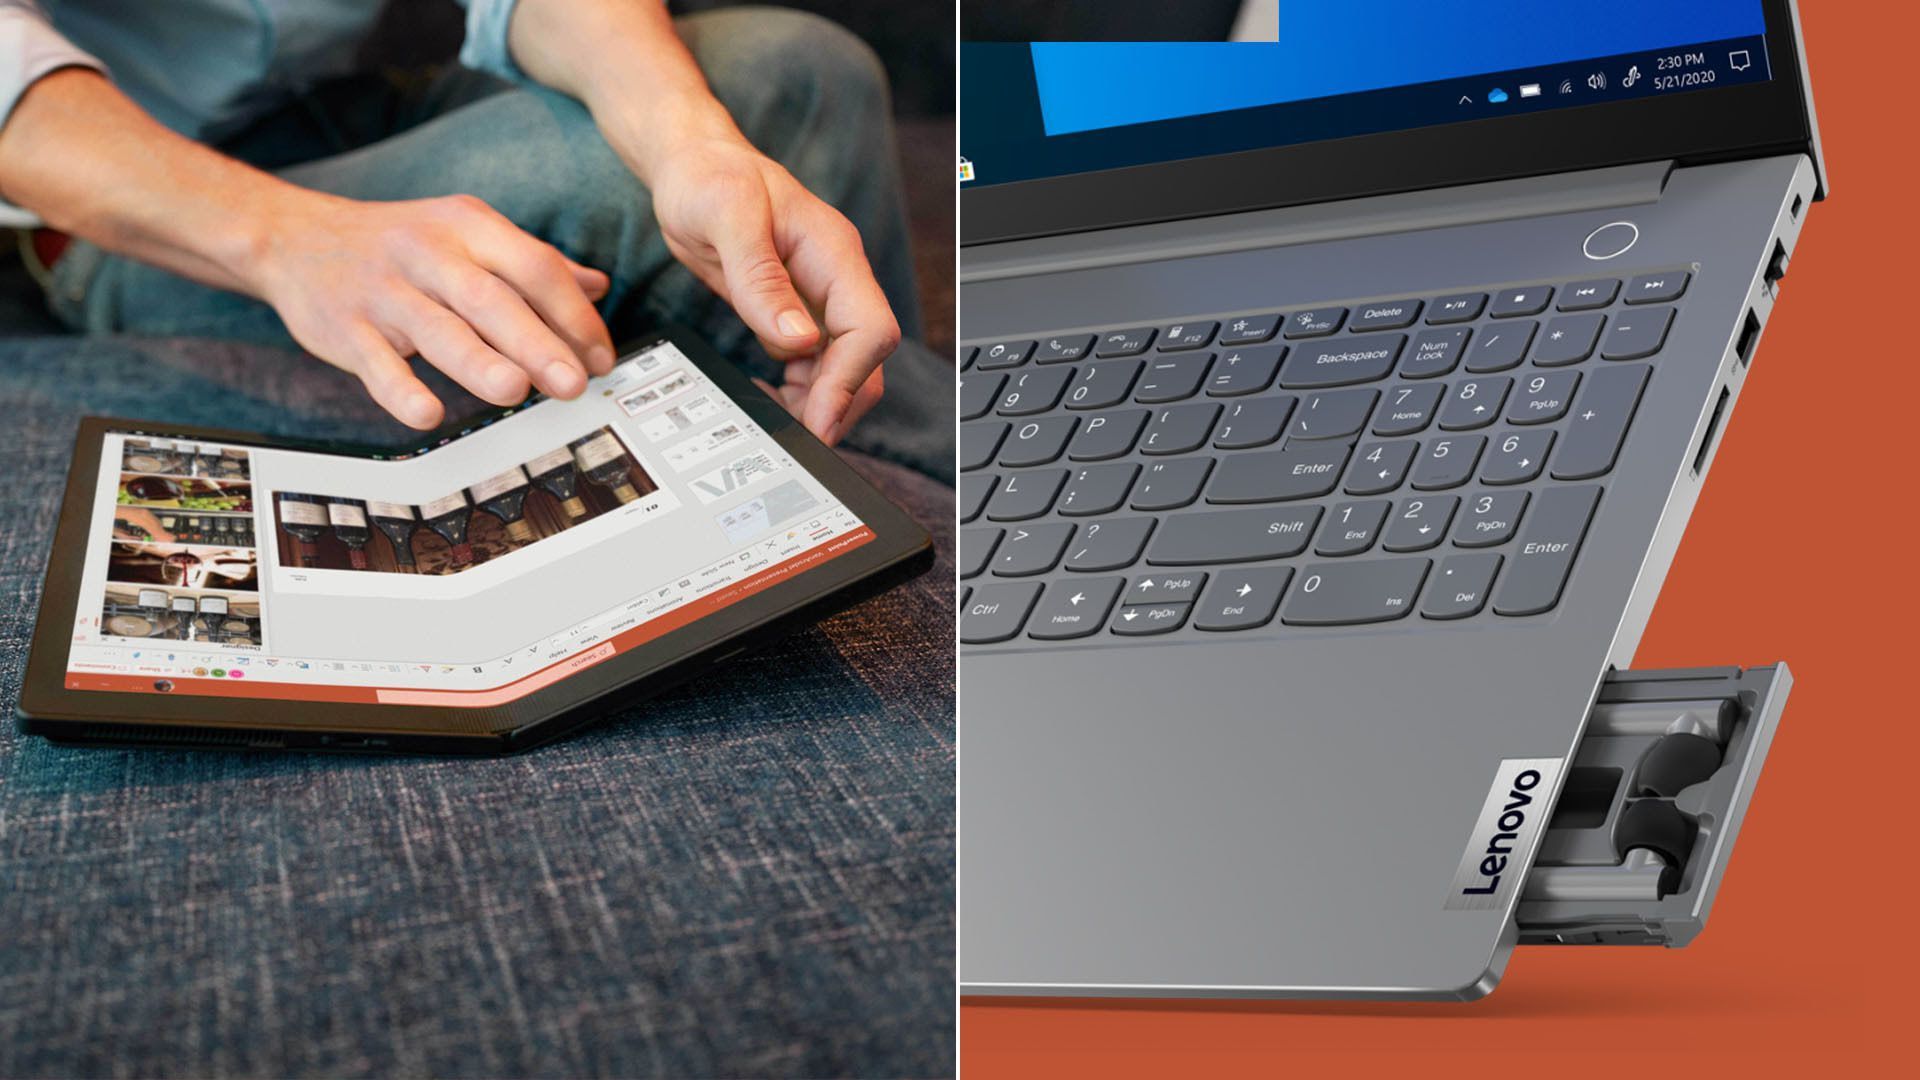 The laptops at hand. Photos: Lenovo